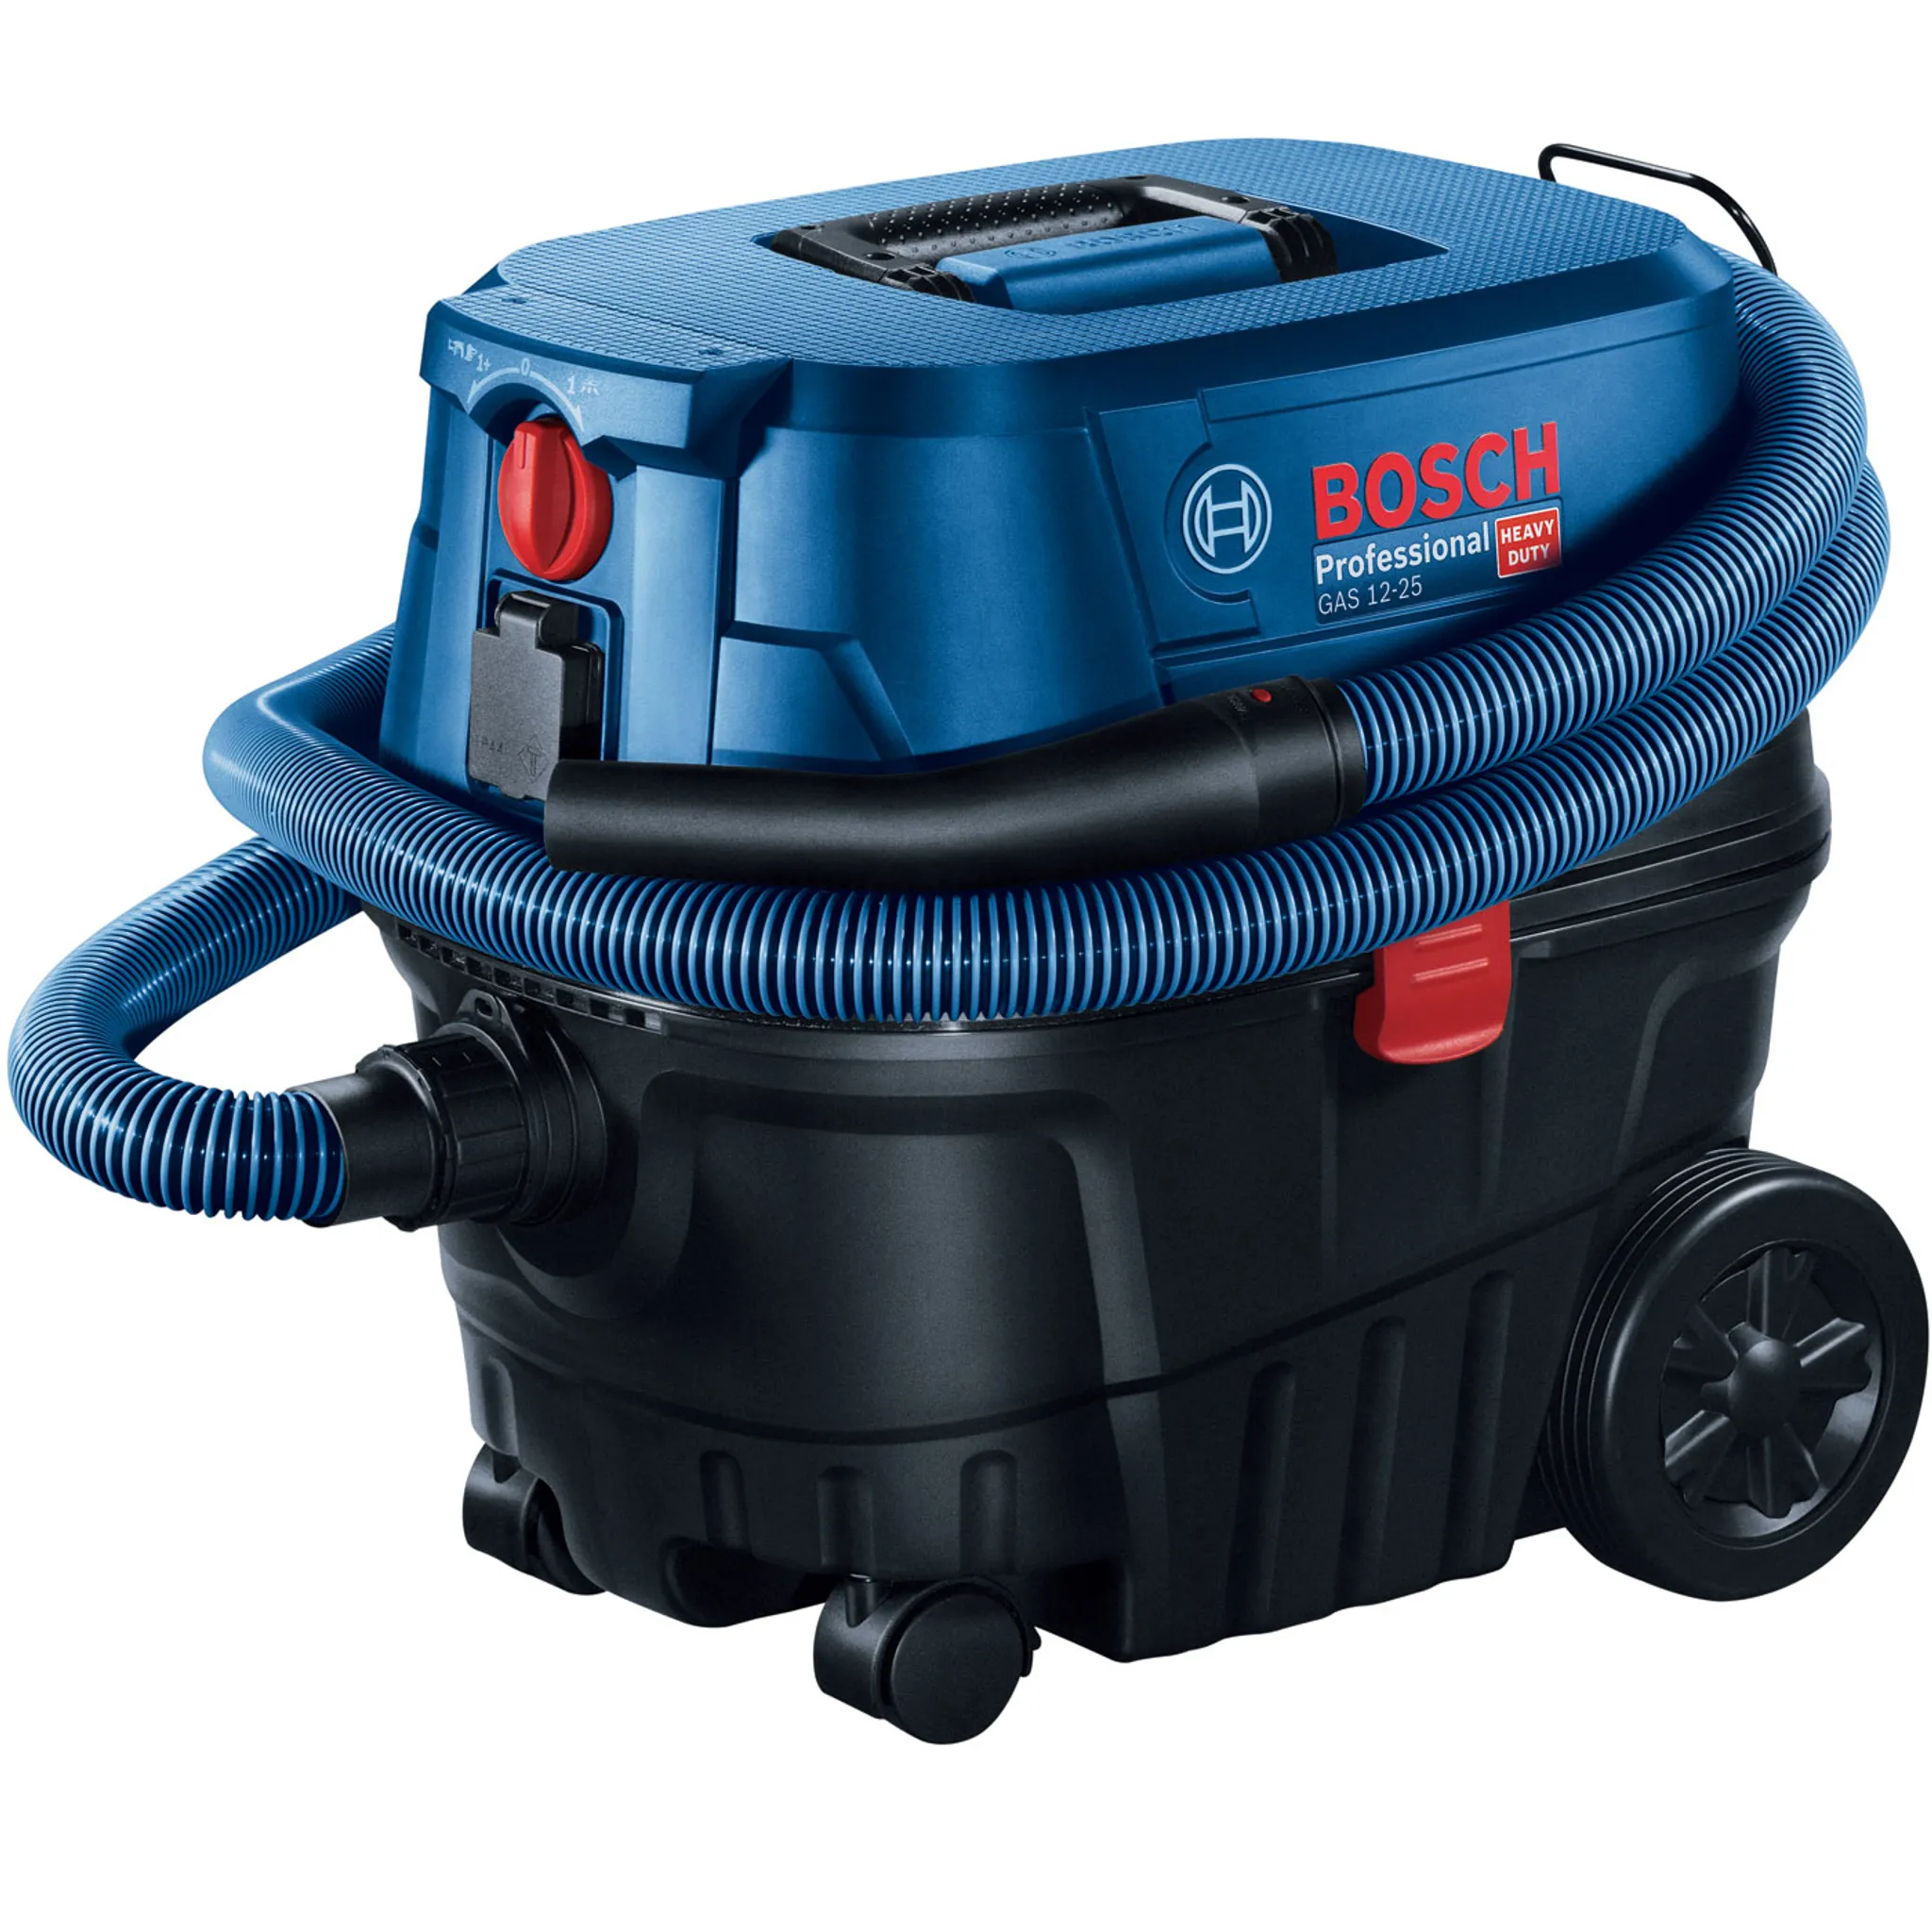 Bosch Professional 12-25 GAS PL